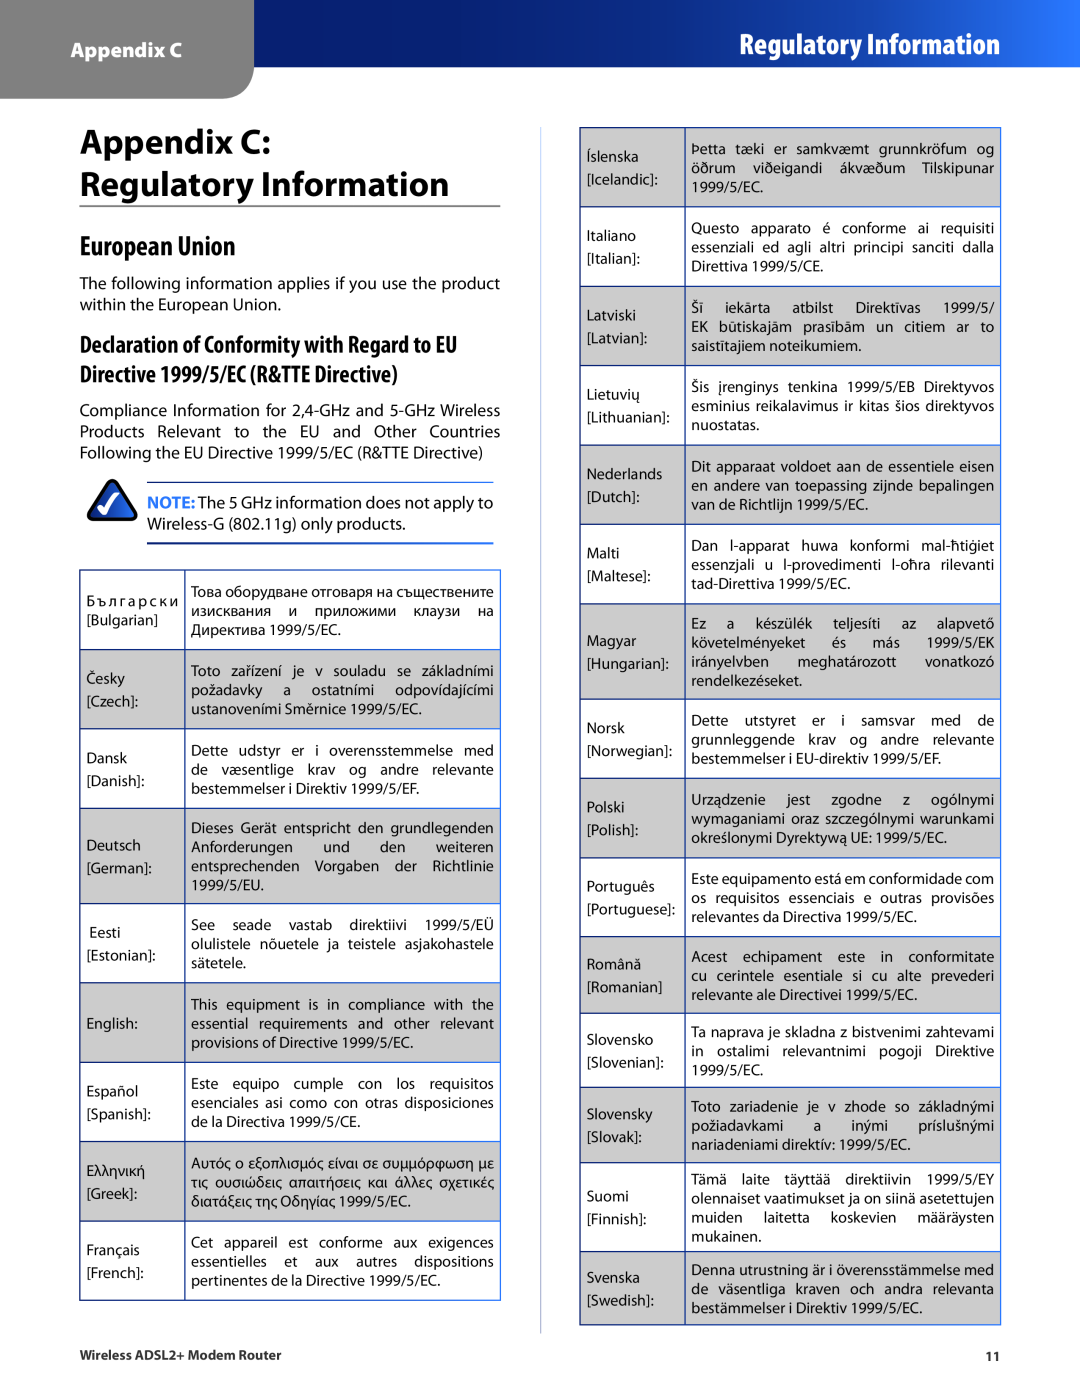 Linksys WAG120N, WAG320N, WAG160N V2 manual European Union, Appendix C Regulatory Information 